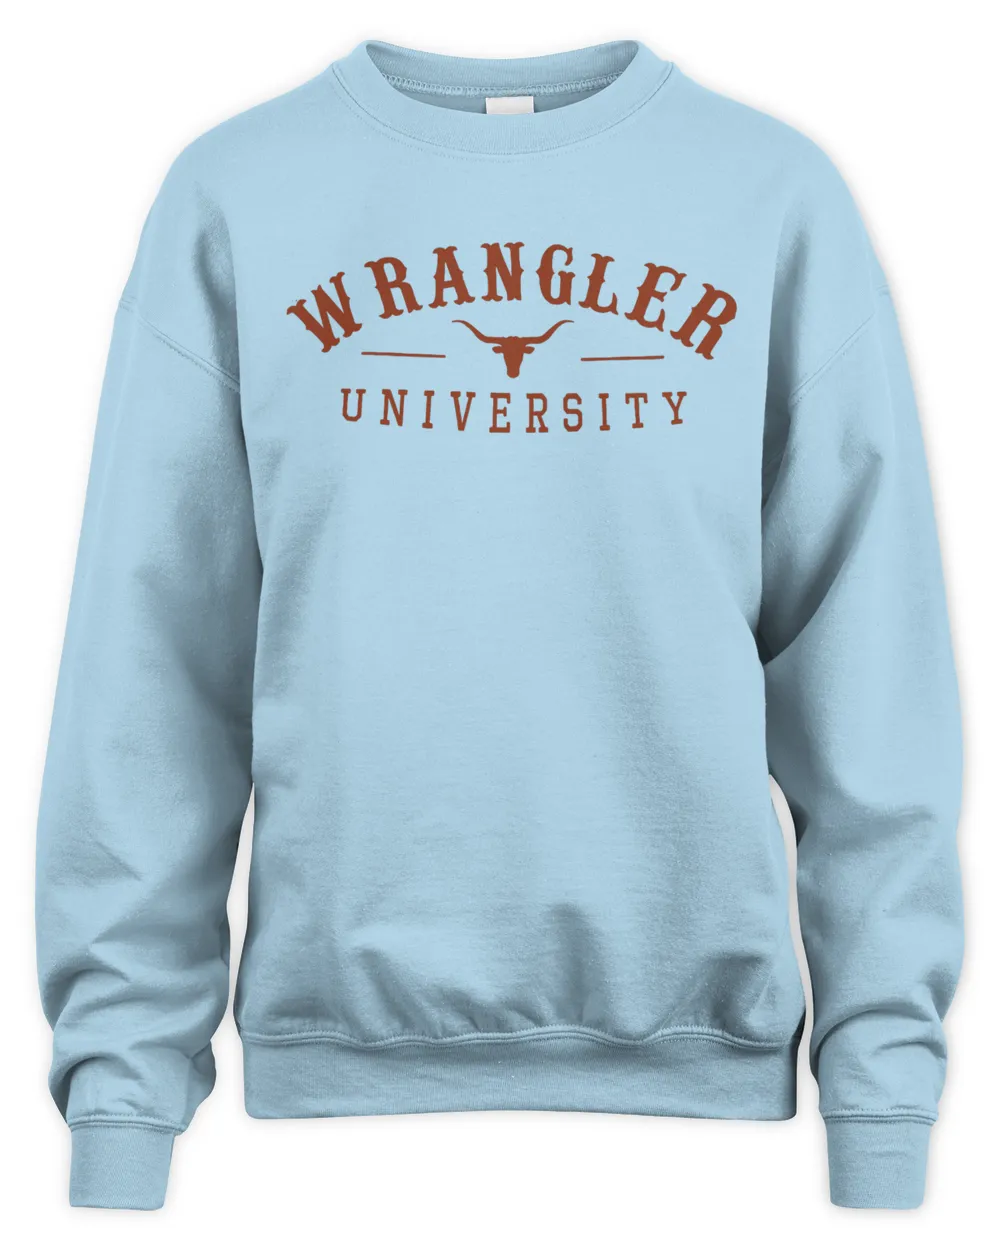 Wrangler University Crewneck